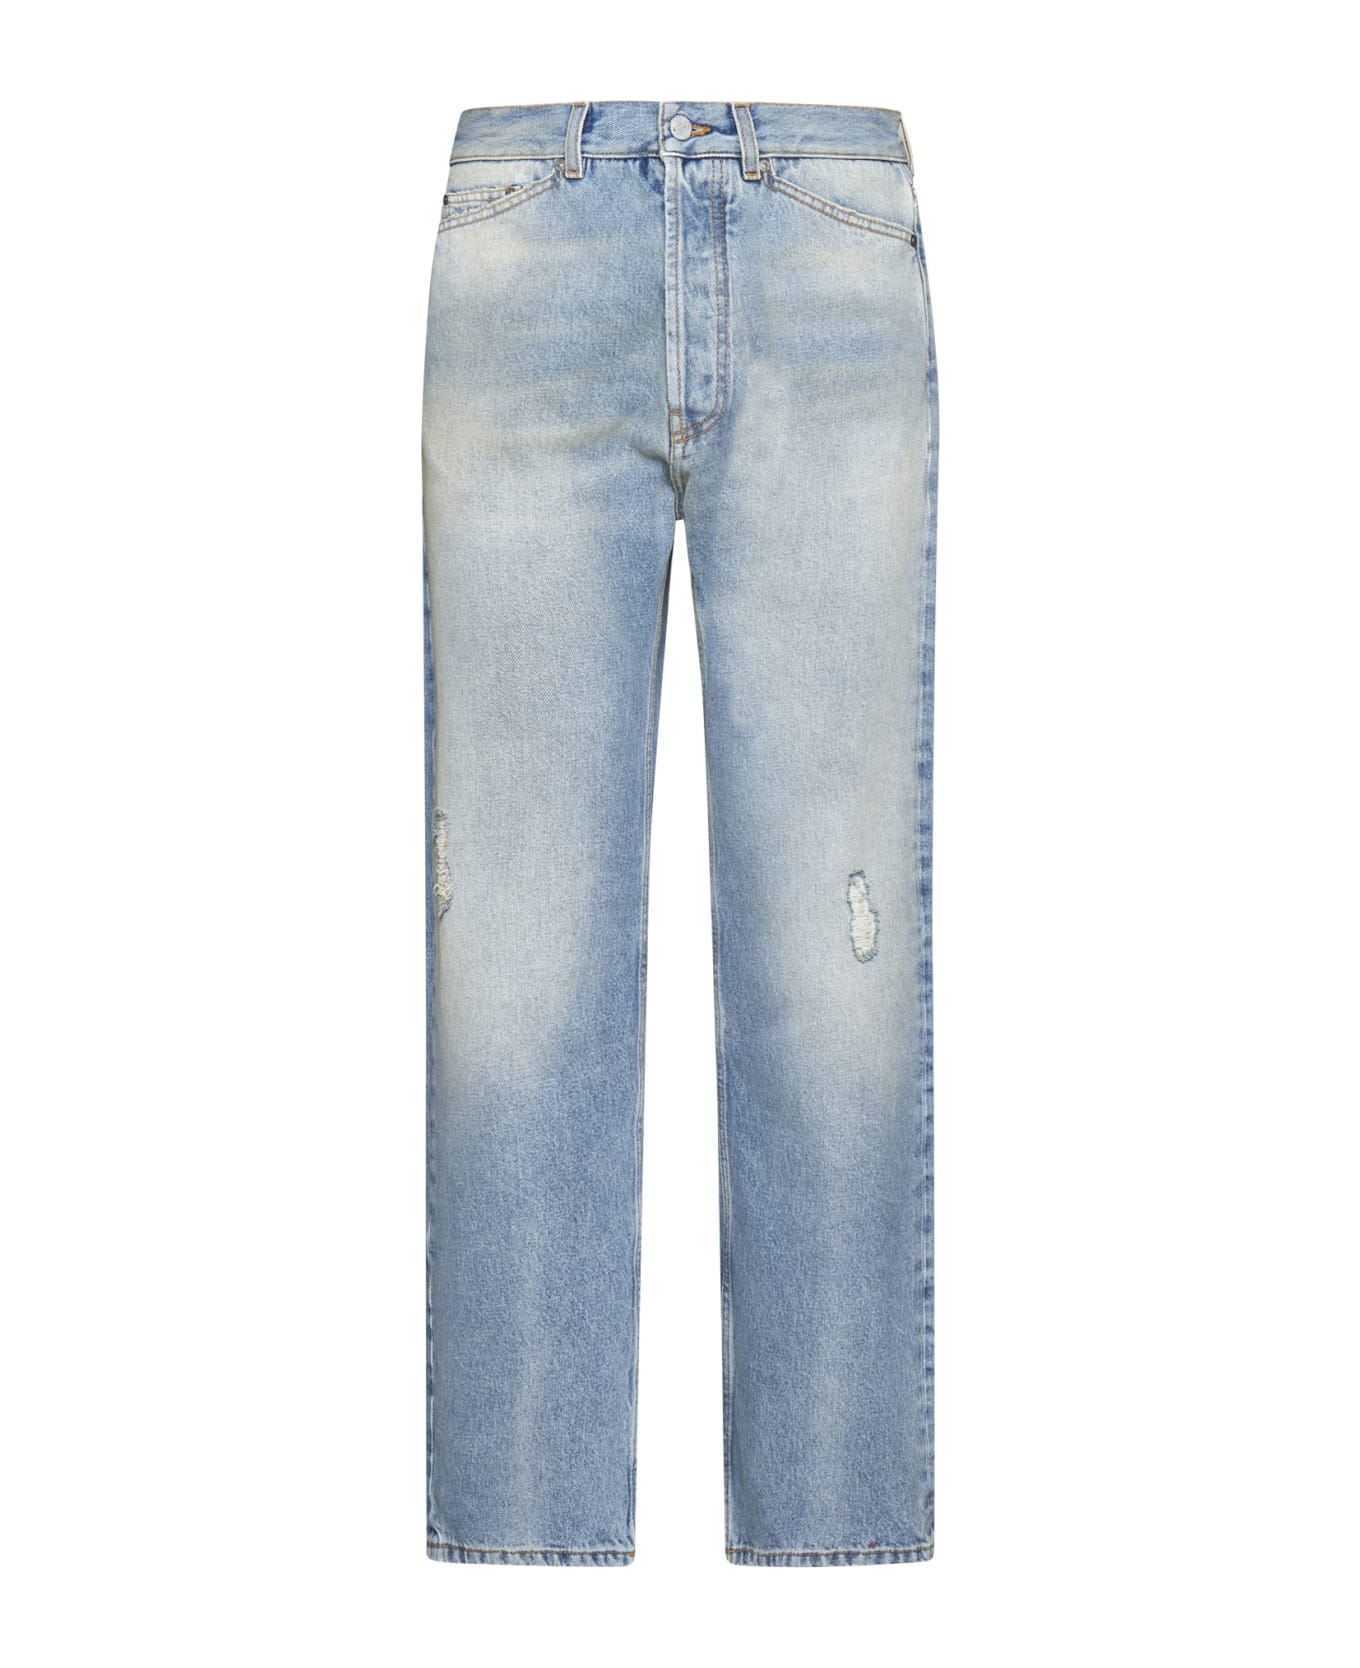 Palm Angels 5-pocket Straight-leg Jeans - Light blue デニム